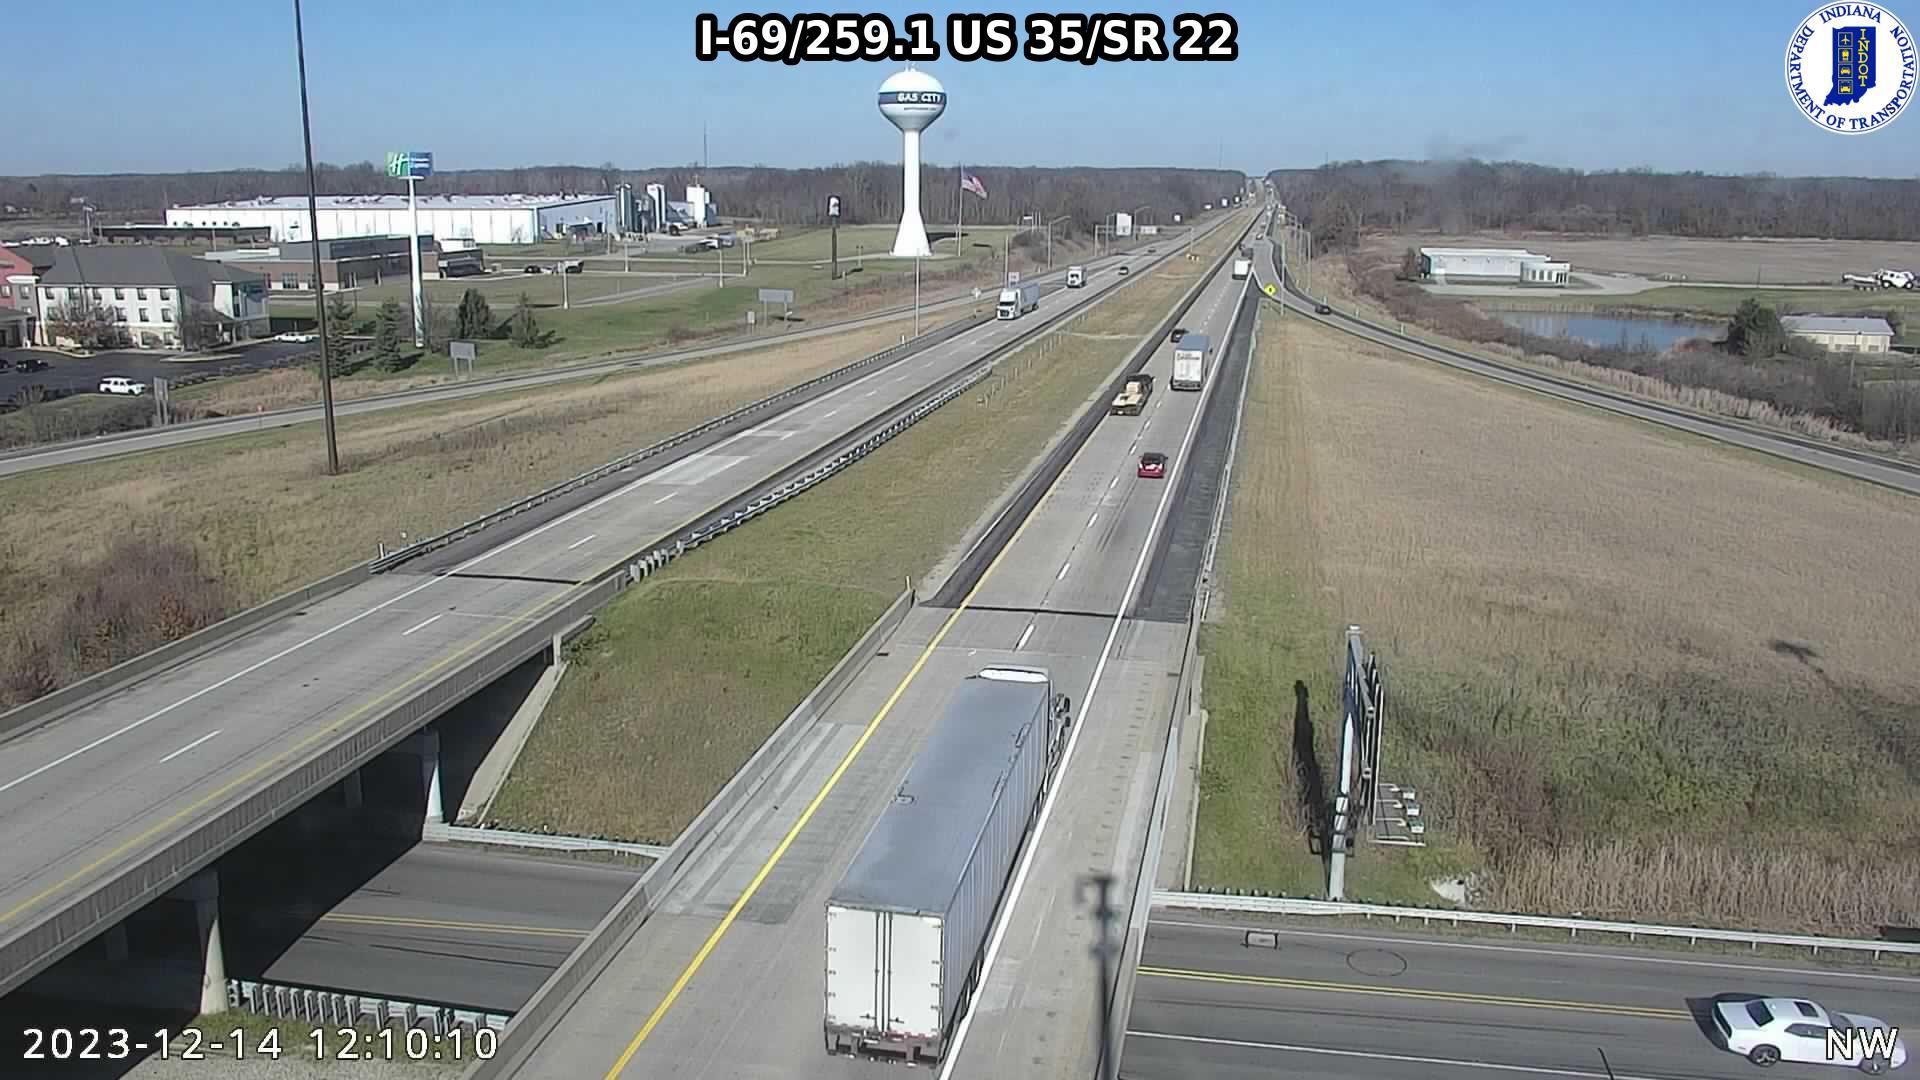 Traffic Cam Upland: I-69: I-69/259.1 US 35/SR